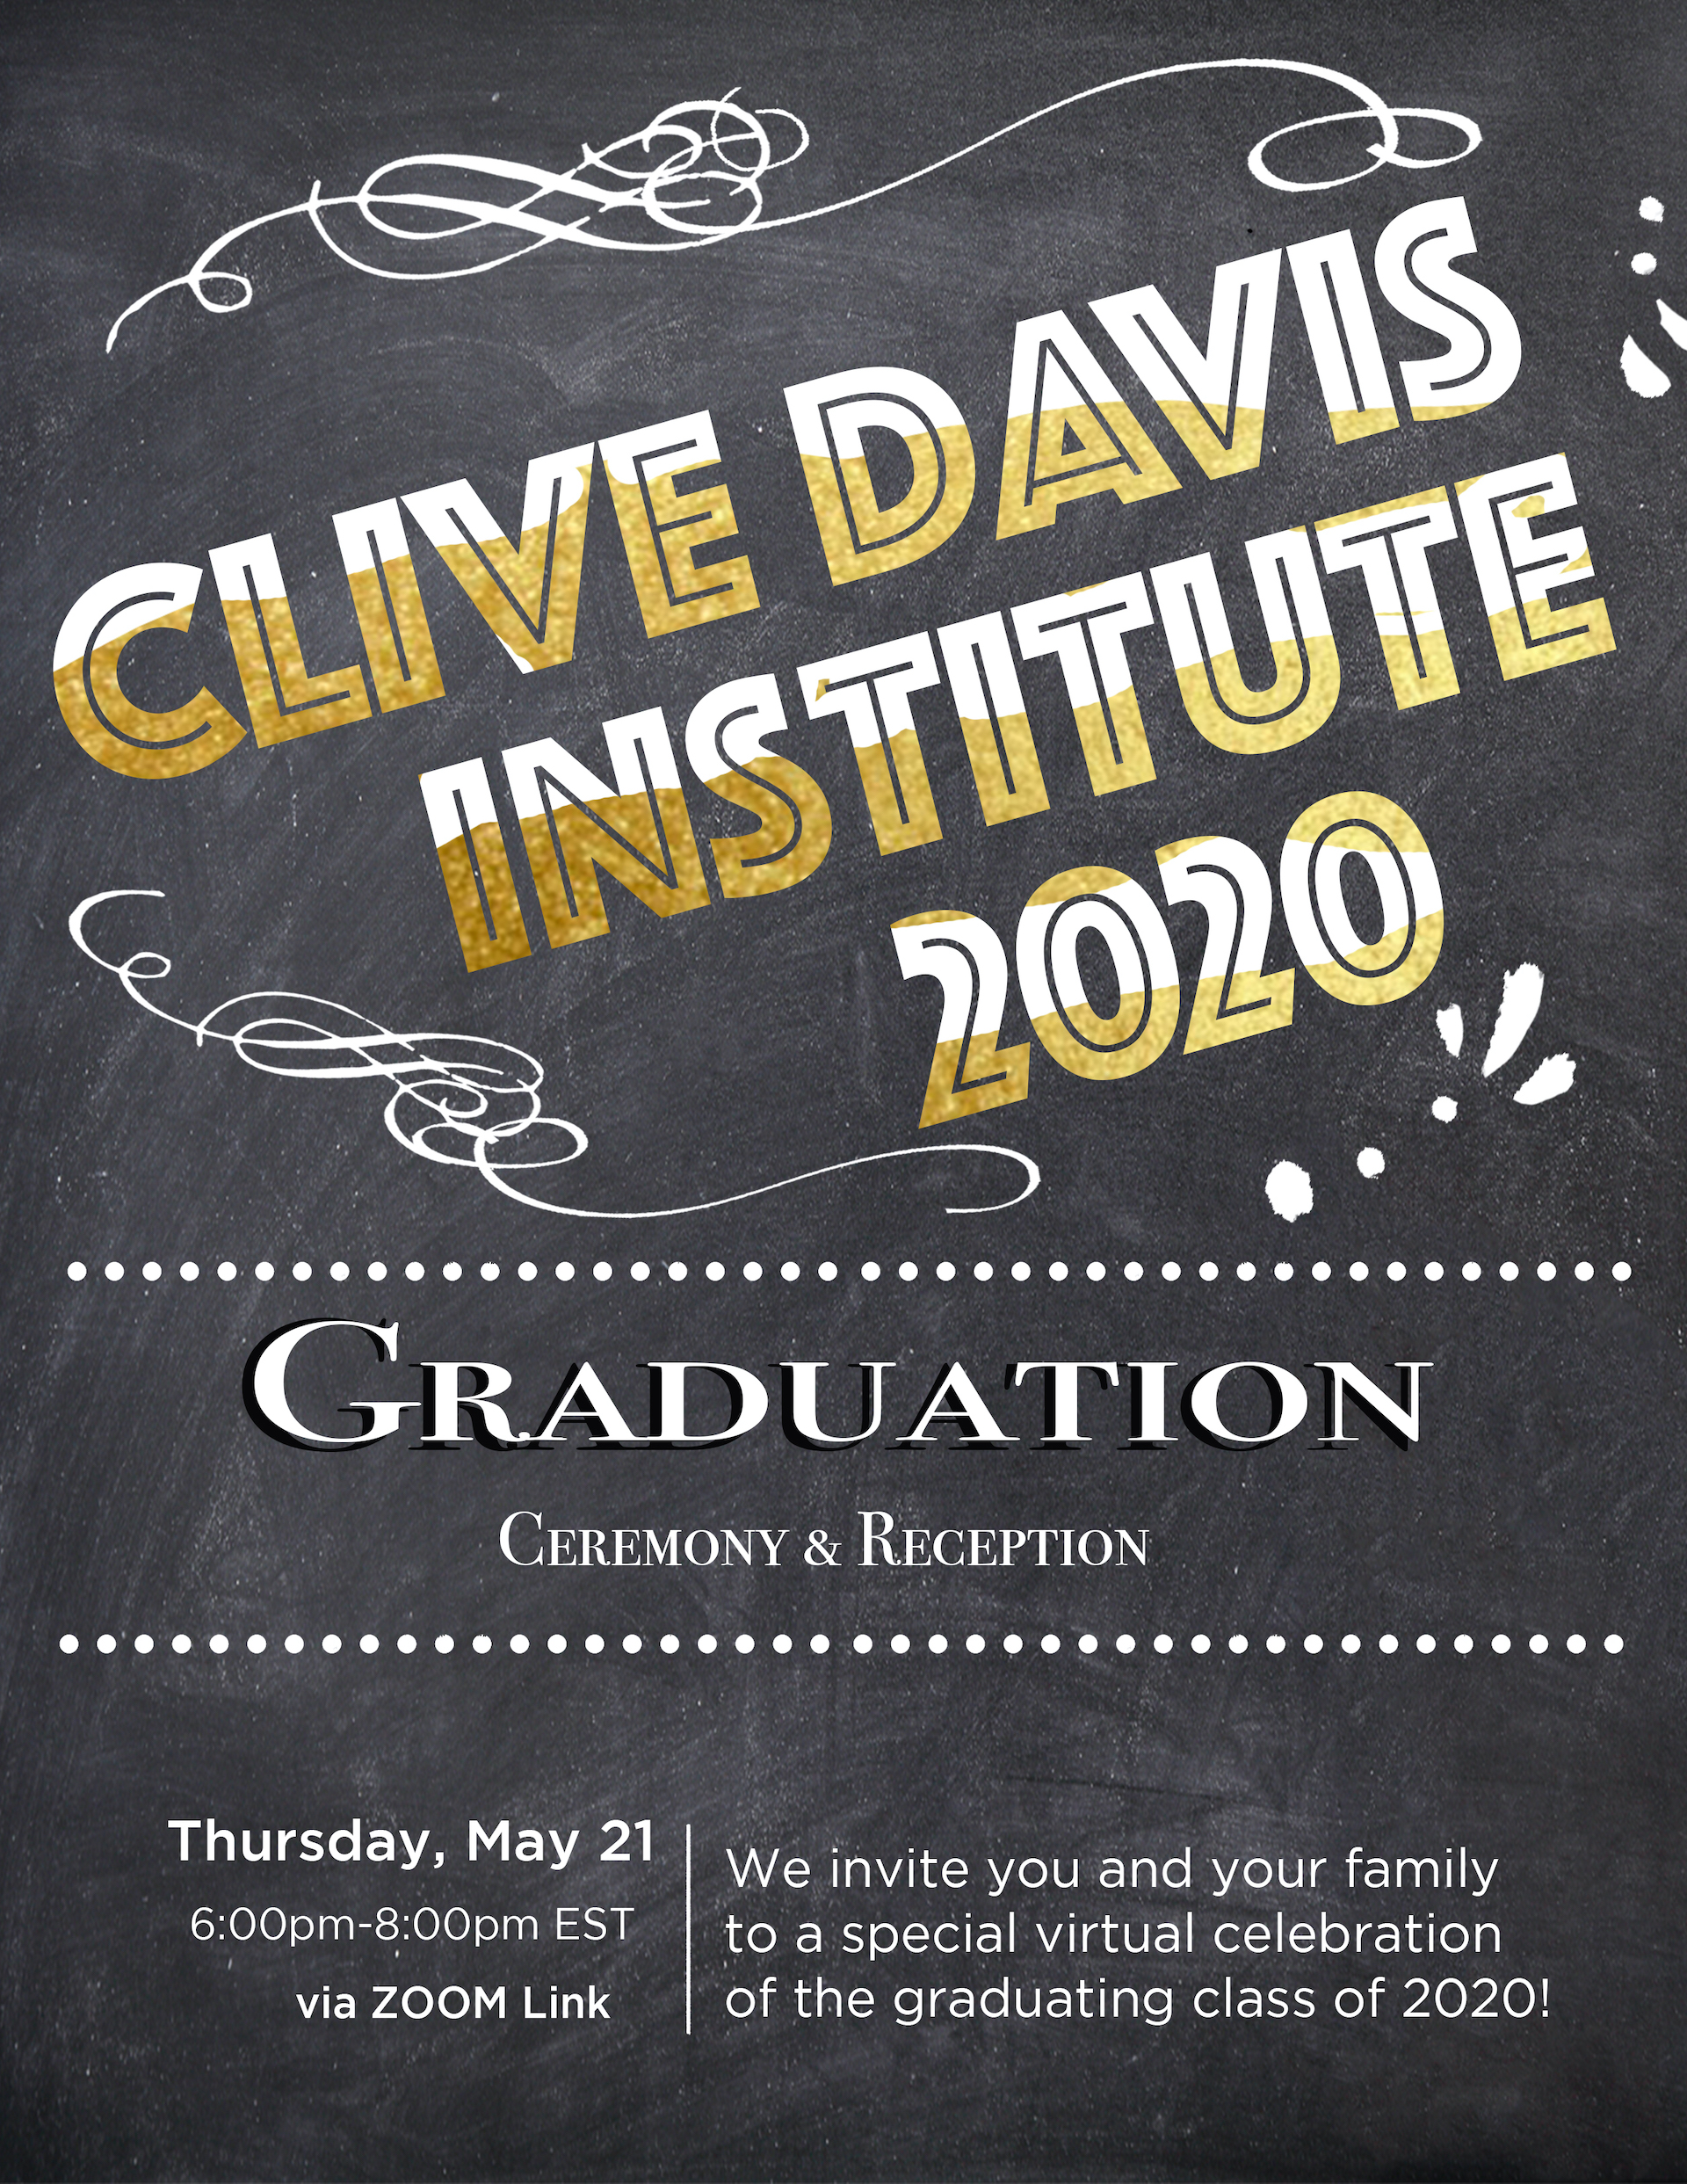 flyer for Clive Davis Institute 2020 virtual graduation event